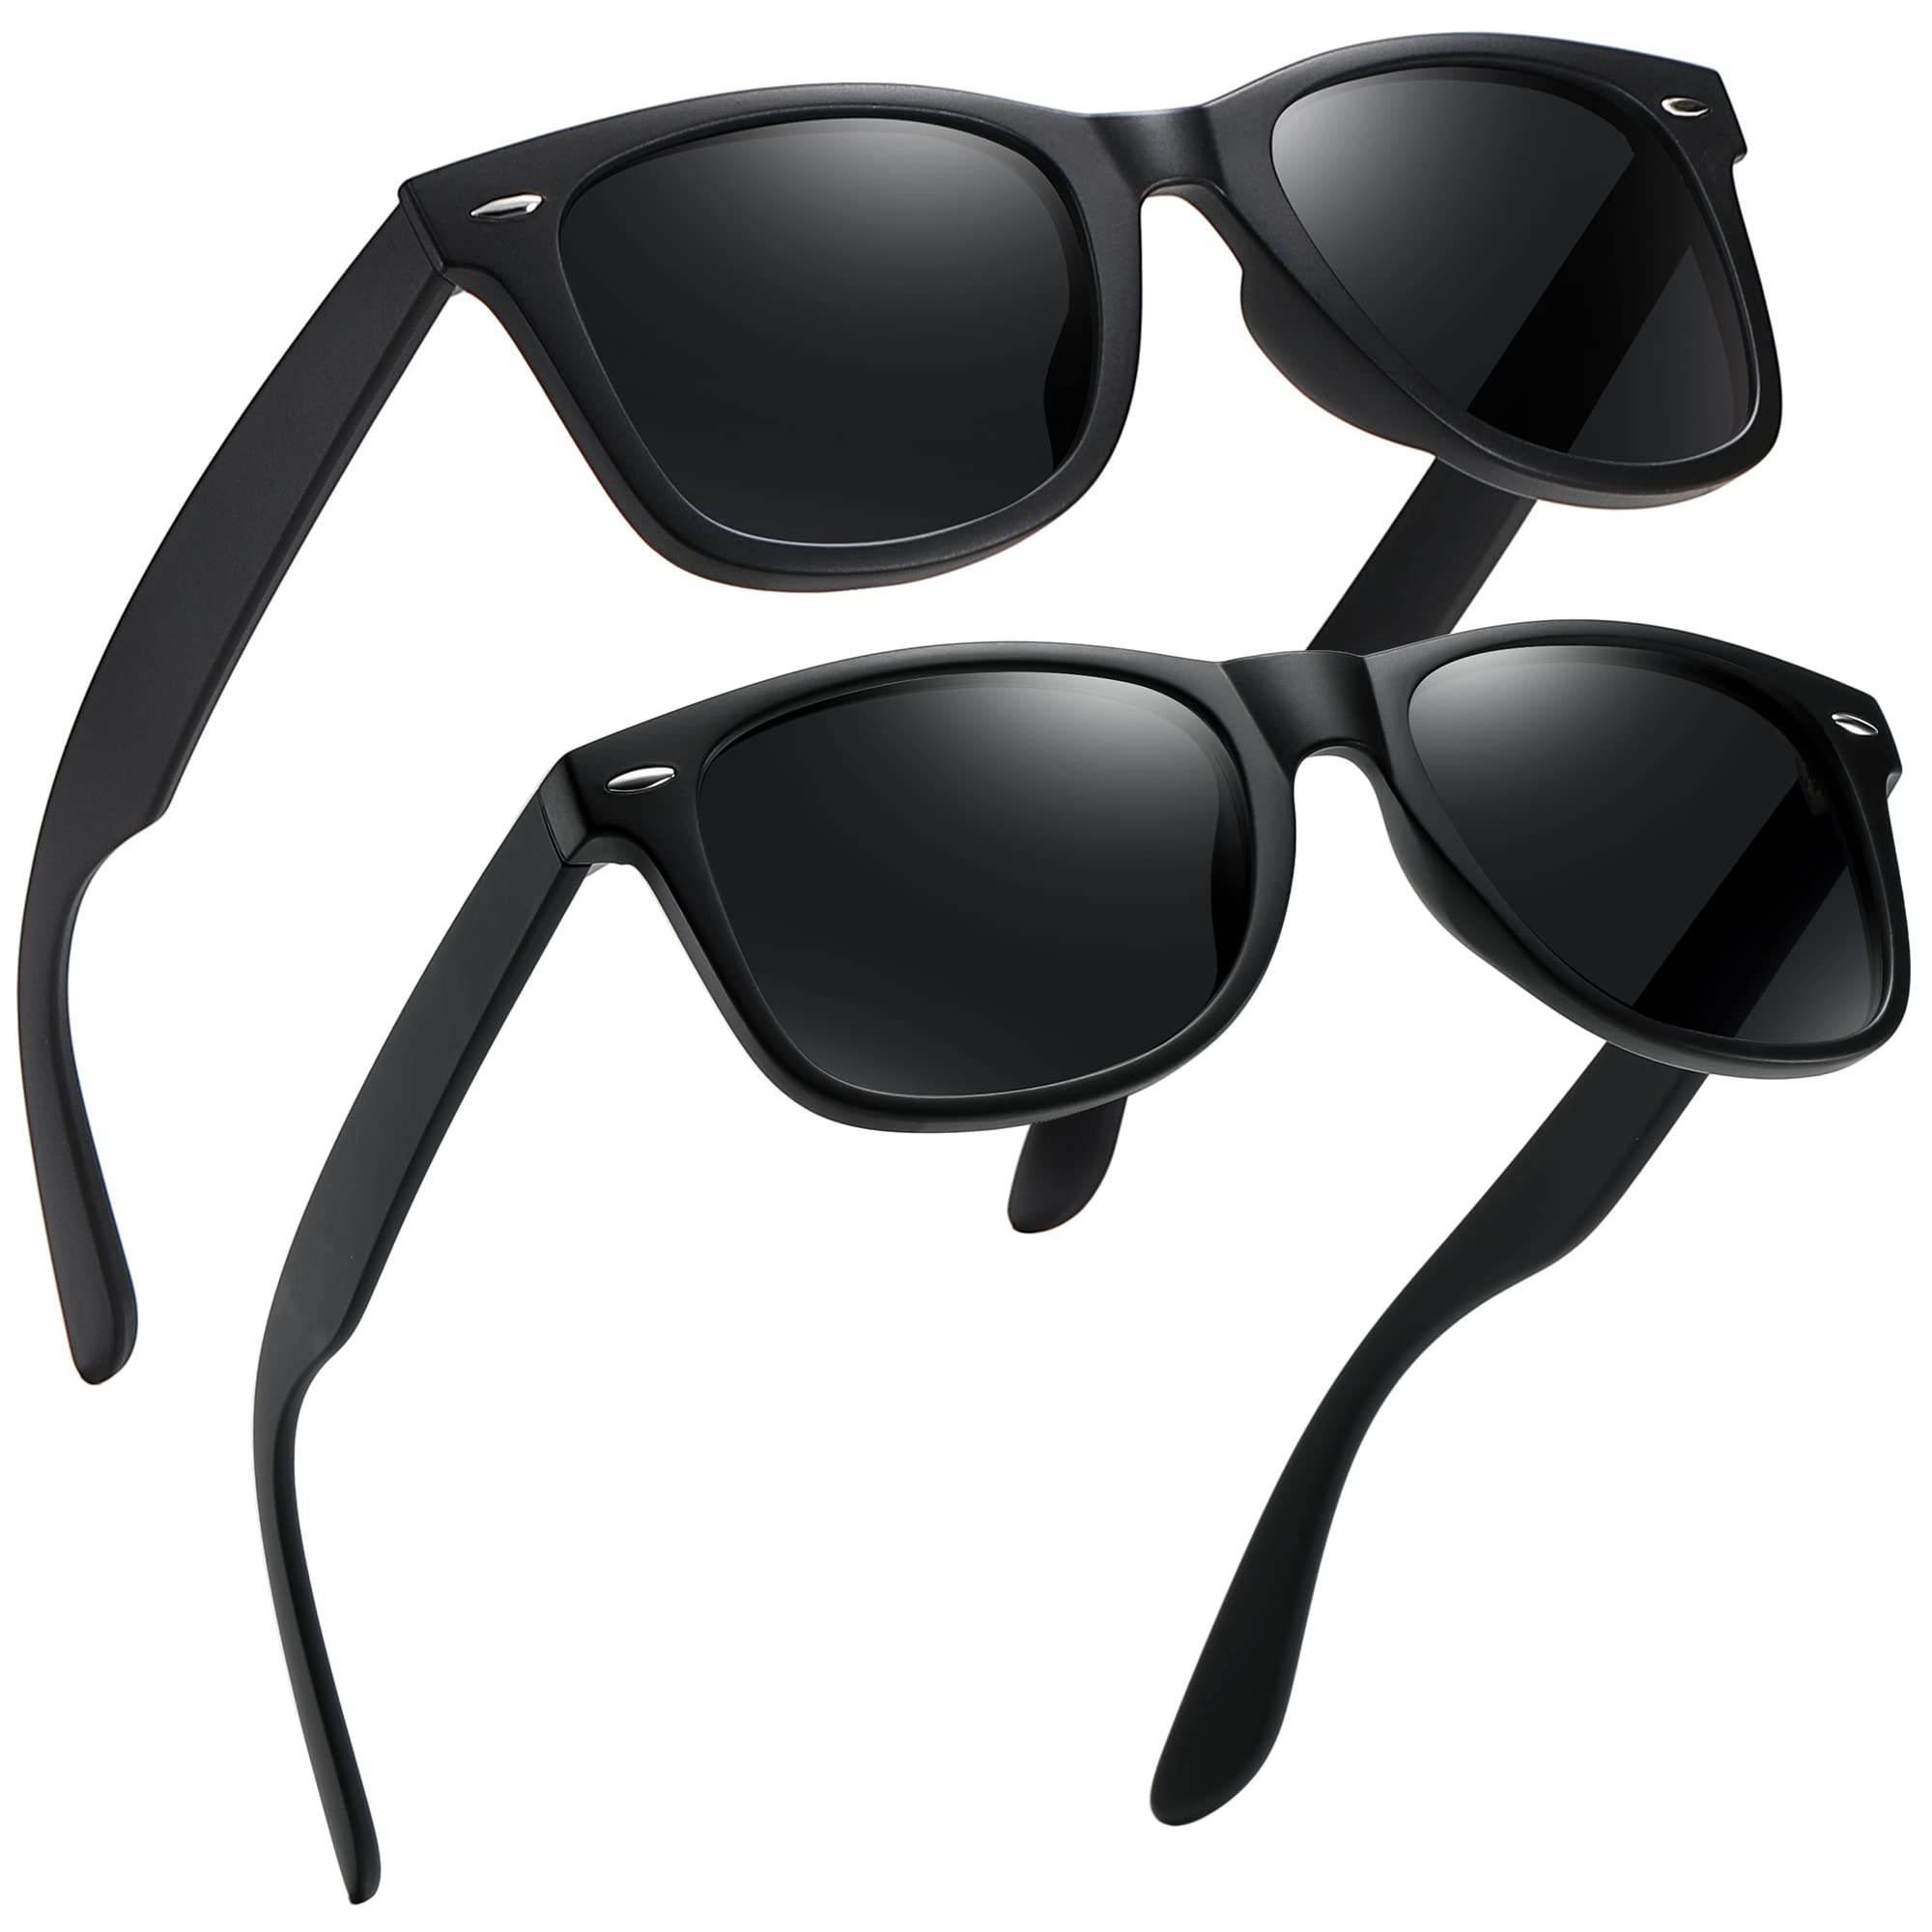 UV400 Men's Fashion Sunglasses Polarized Sunglasses Sport Driving Glasses  Women Classic Male Eyewear Travel Fishing Sunglasses